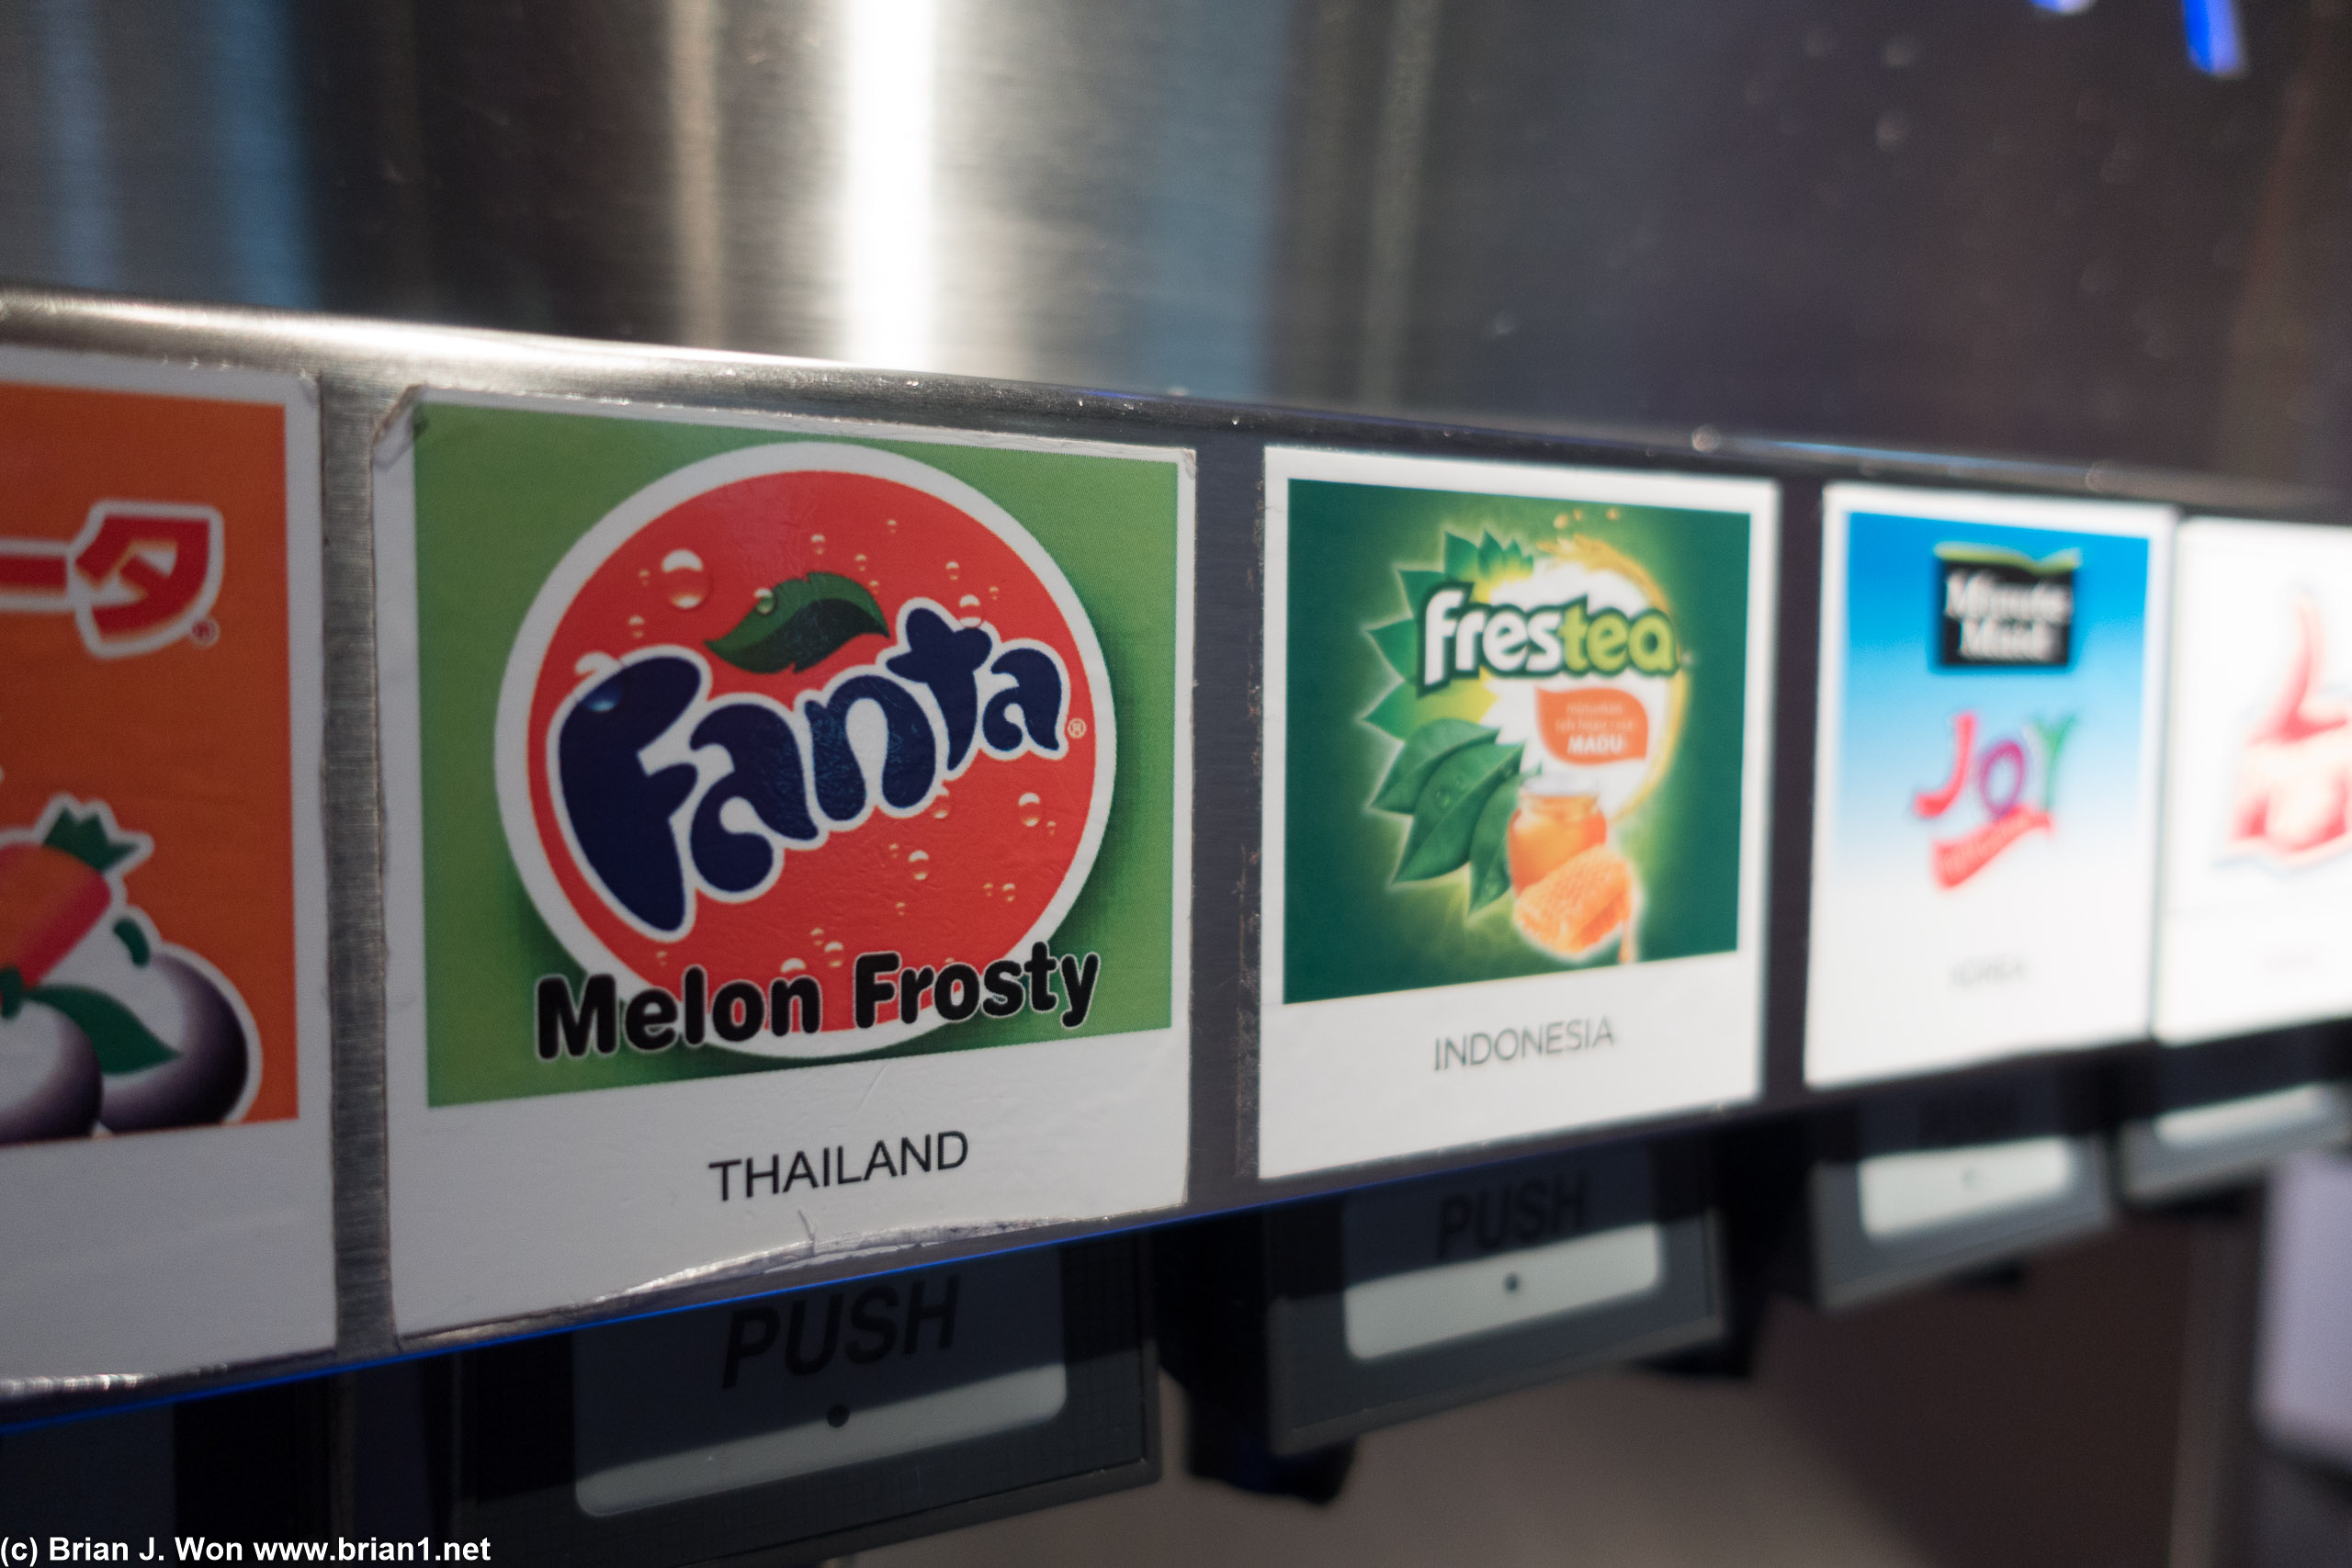 Fanta Melon Frosty in Thailand.